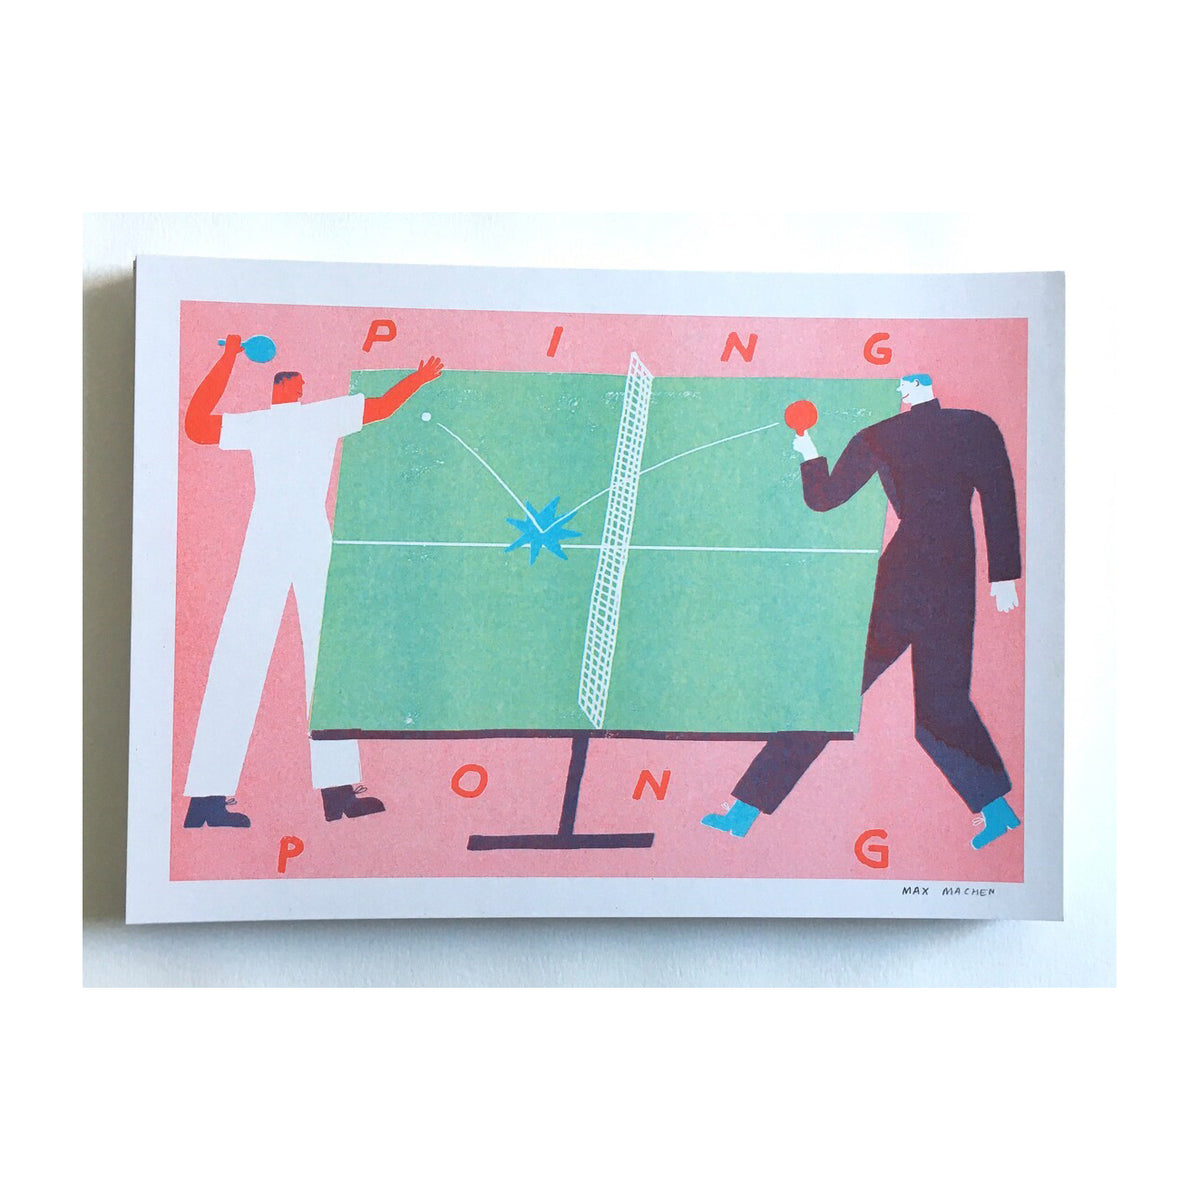 Max Machen Ping Pong Print